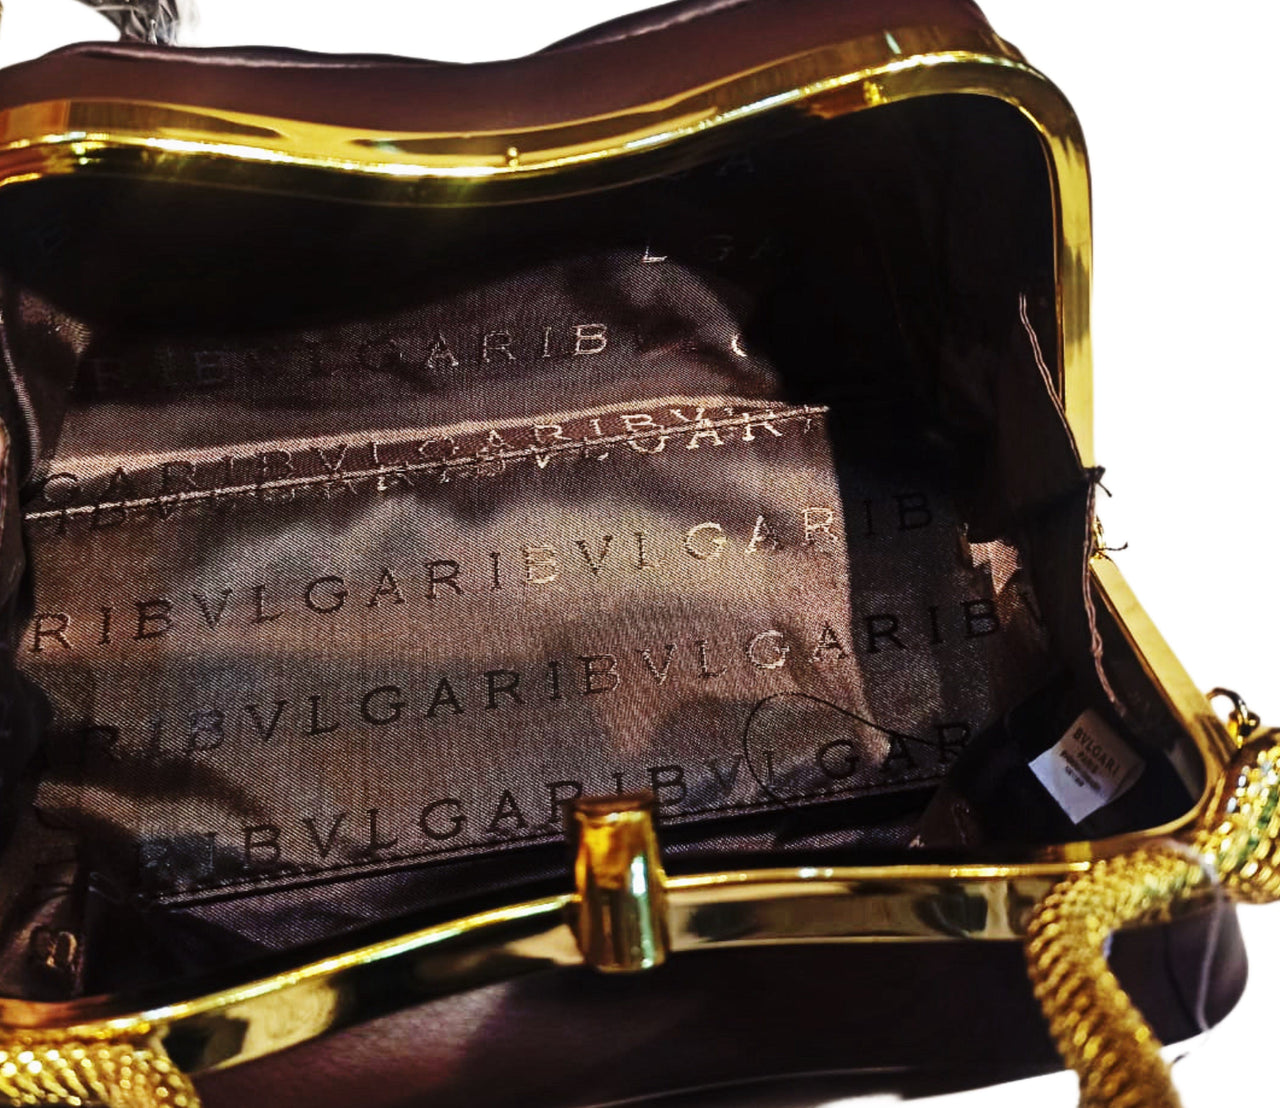 The Bag Couture Handbags, Wallets & Cases BVLGARI Serpentine Top Handle Handag Dark Brown